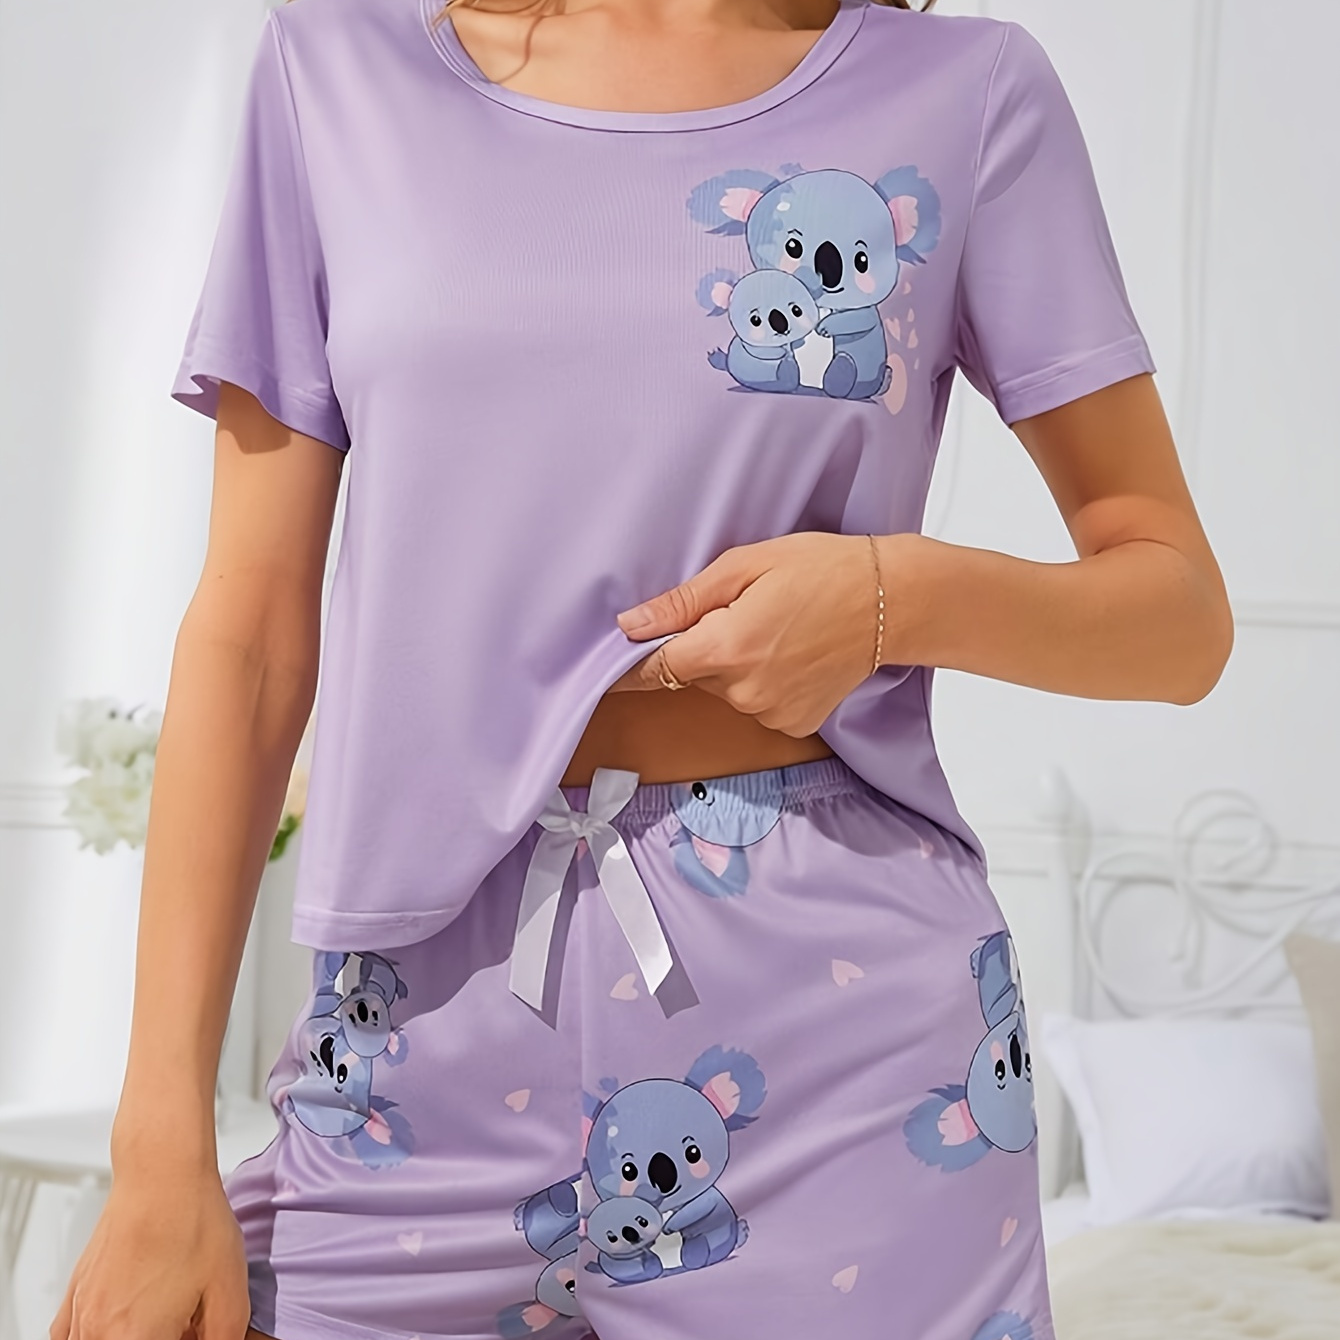 

Cute Koala Print Pajama Set, Round Neck Short Sleeve Top & Elastic Shorts, Women's Sleepwear